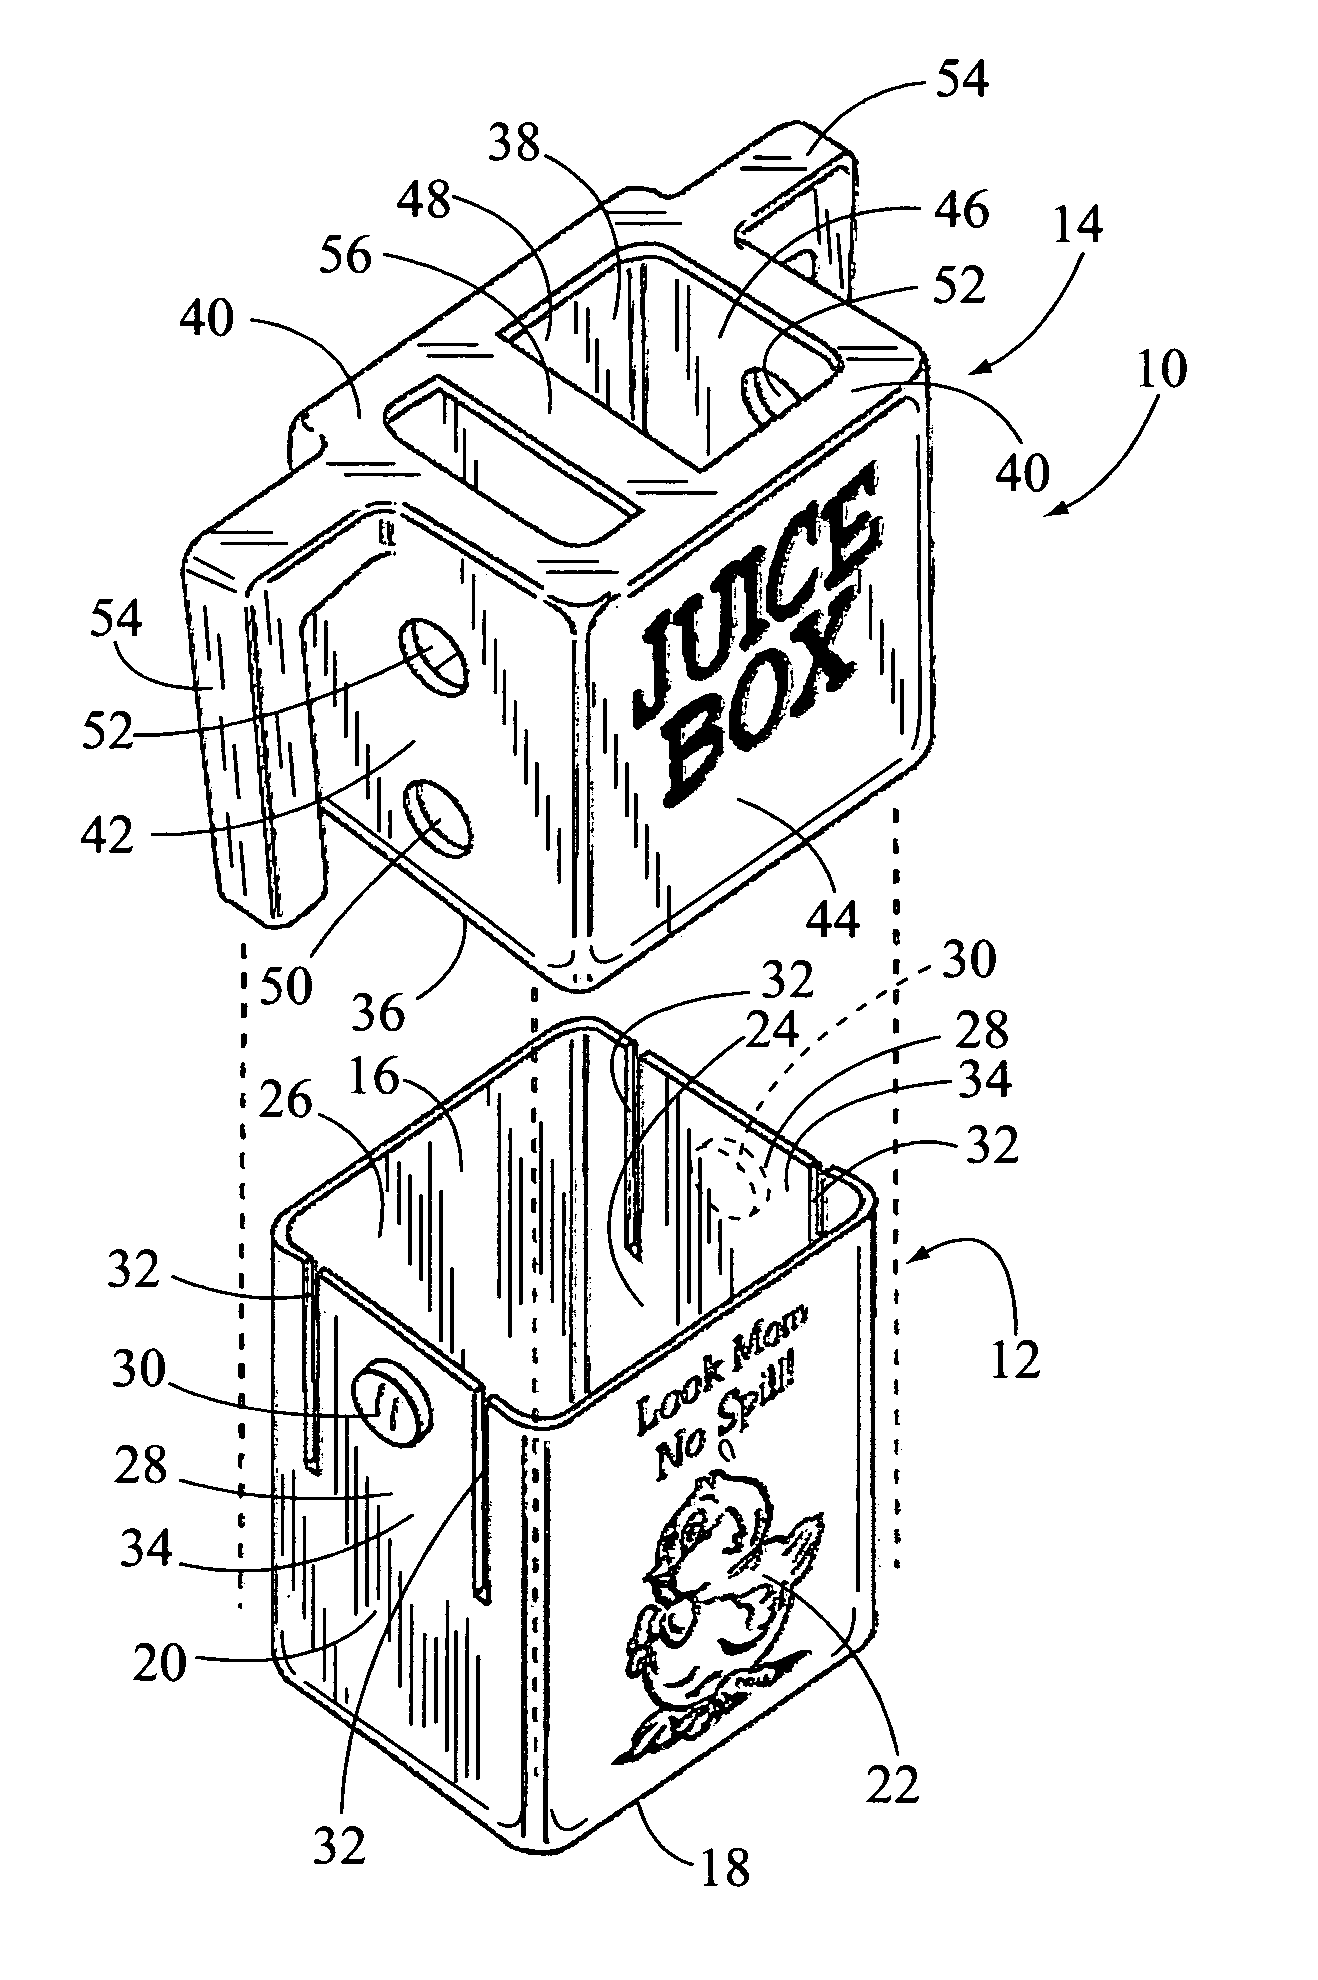 Two-piece juice box holder